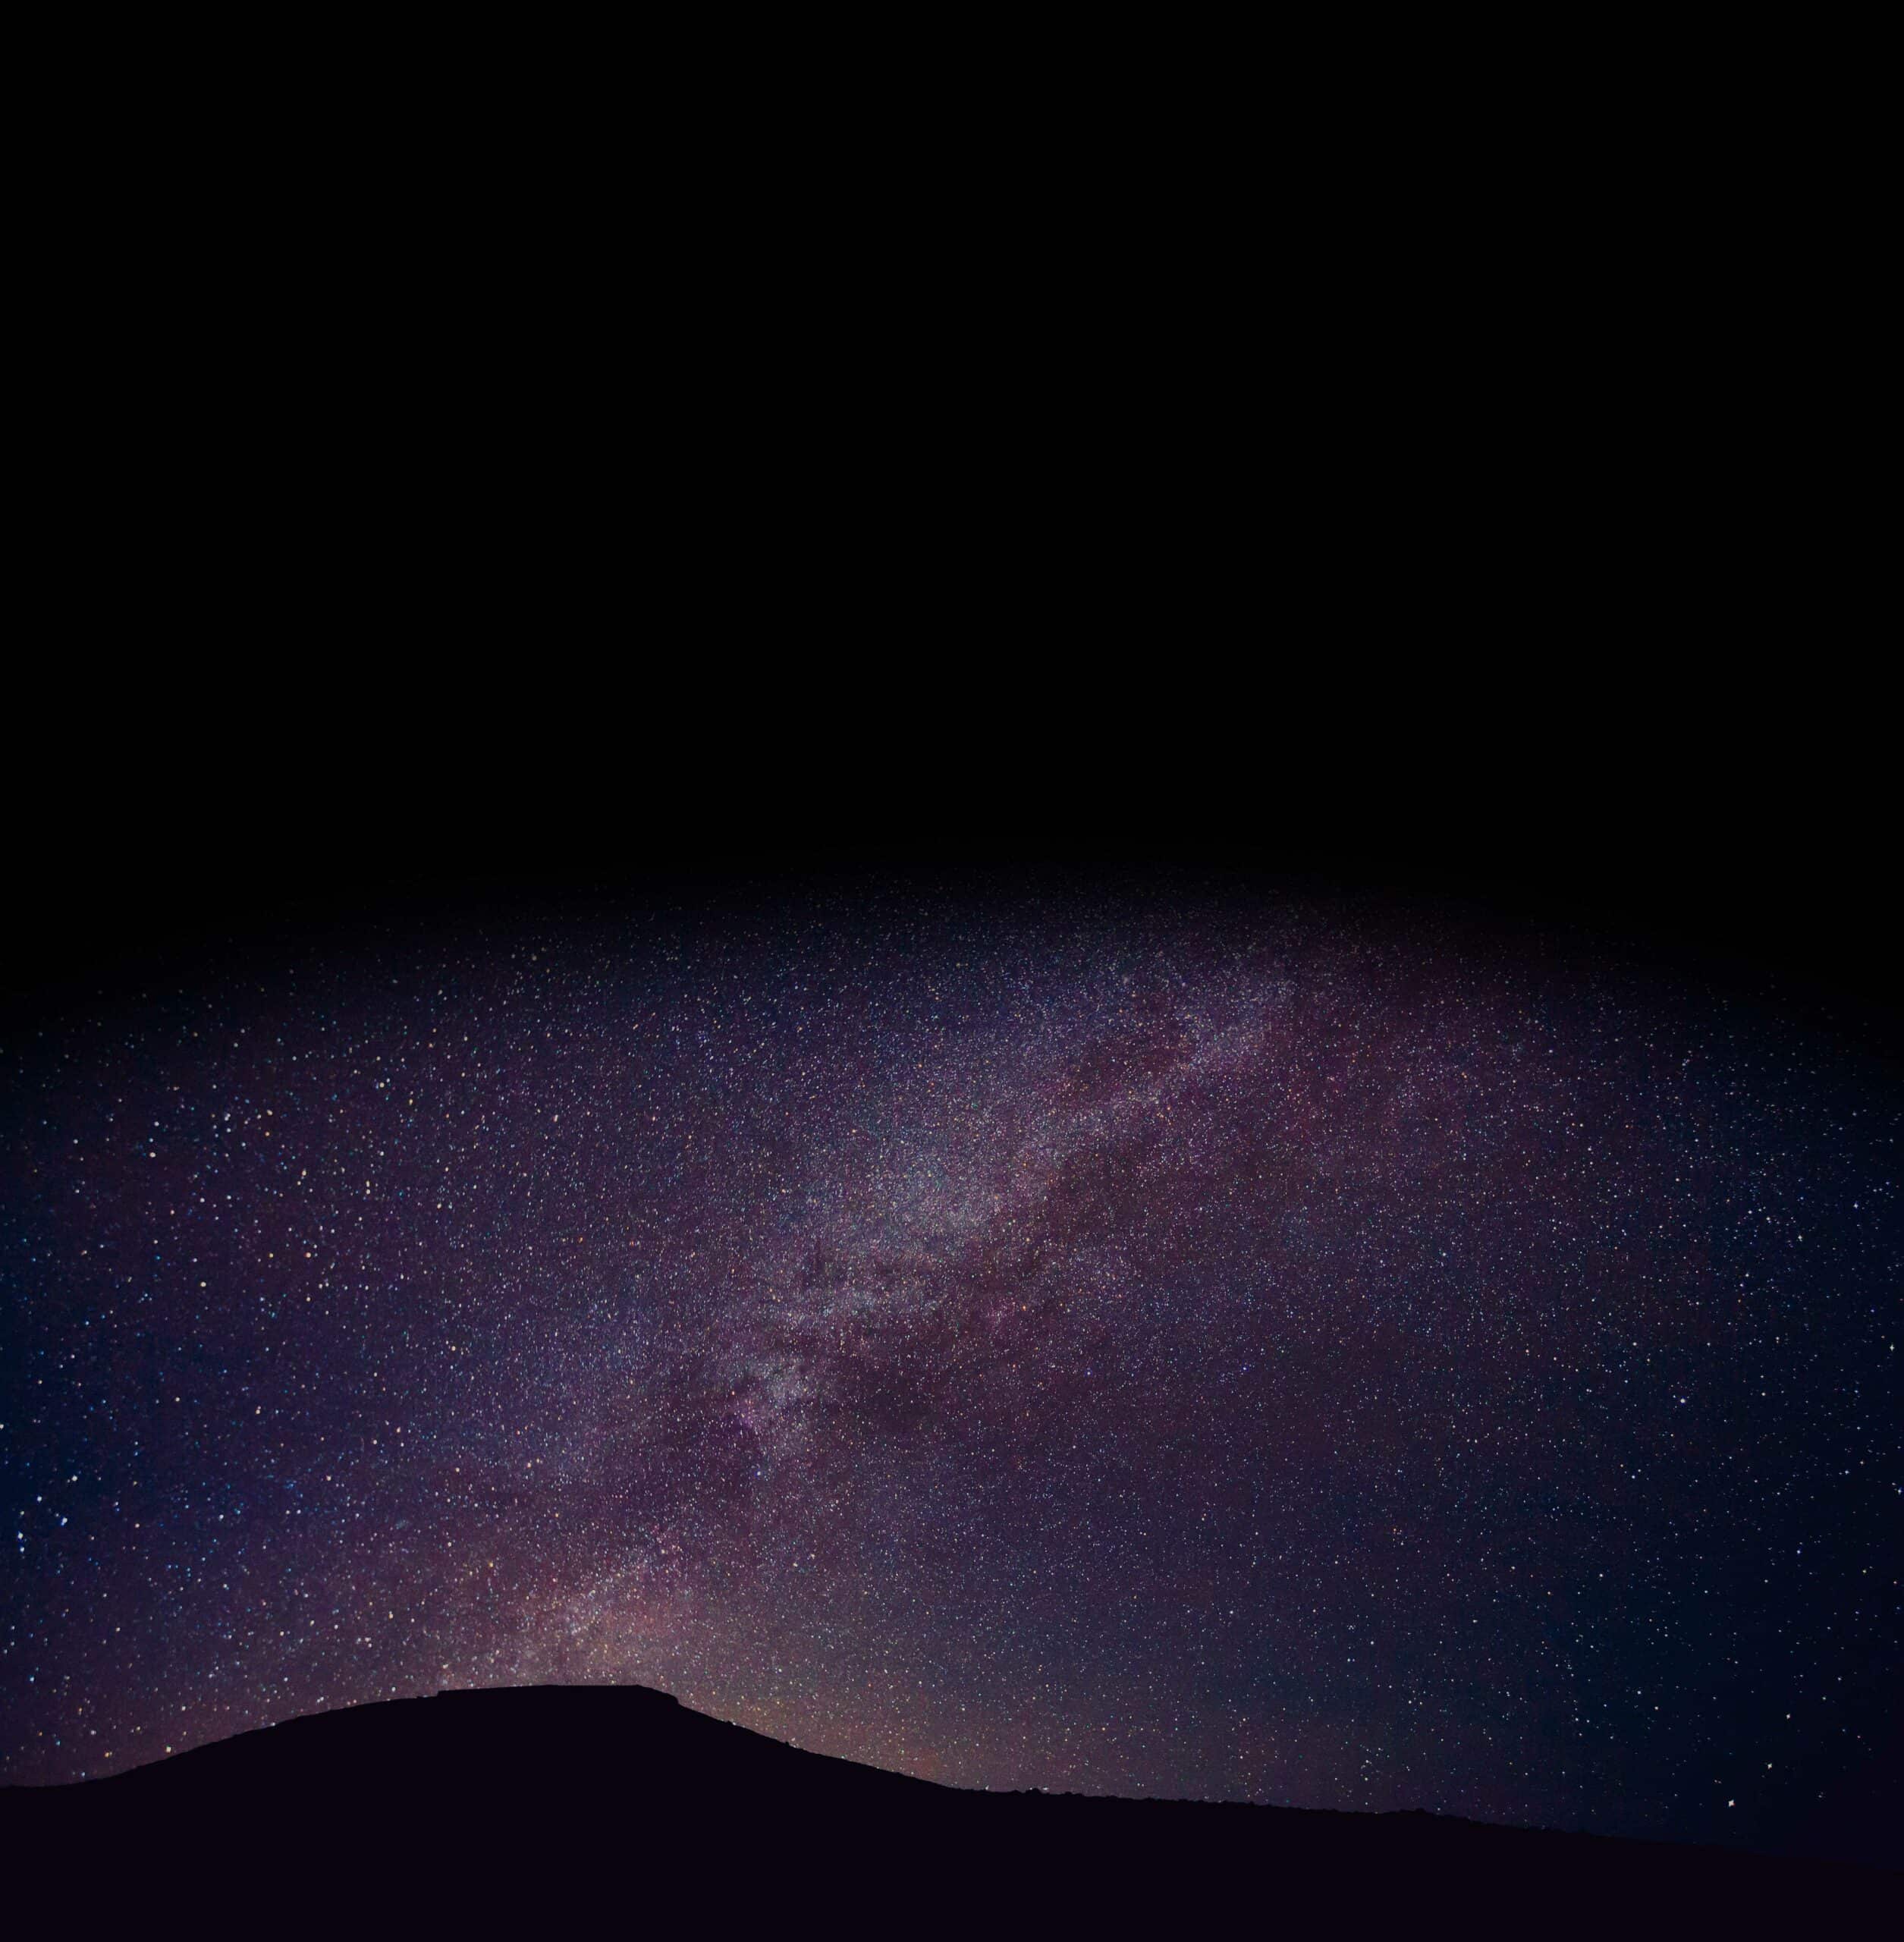 Galaxy IT - purple night sky